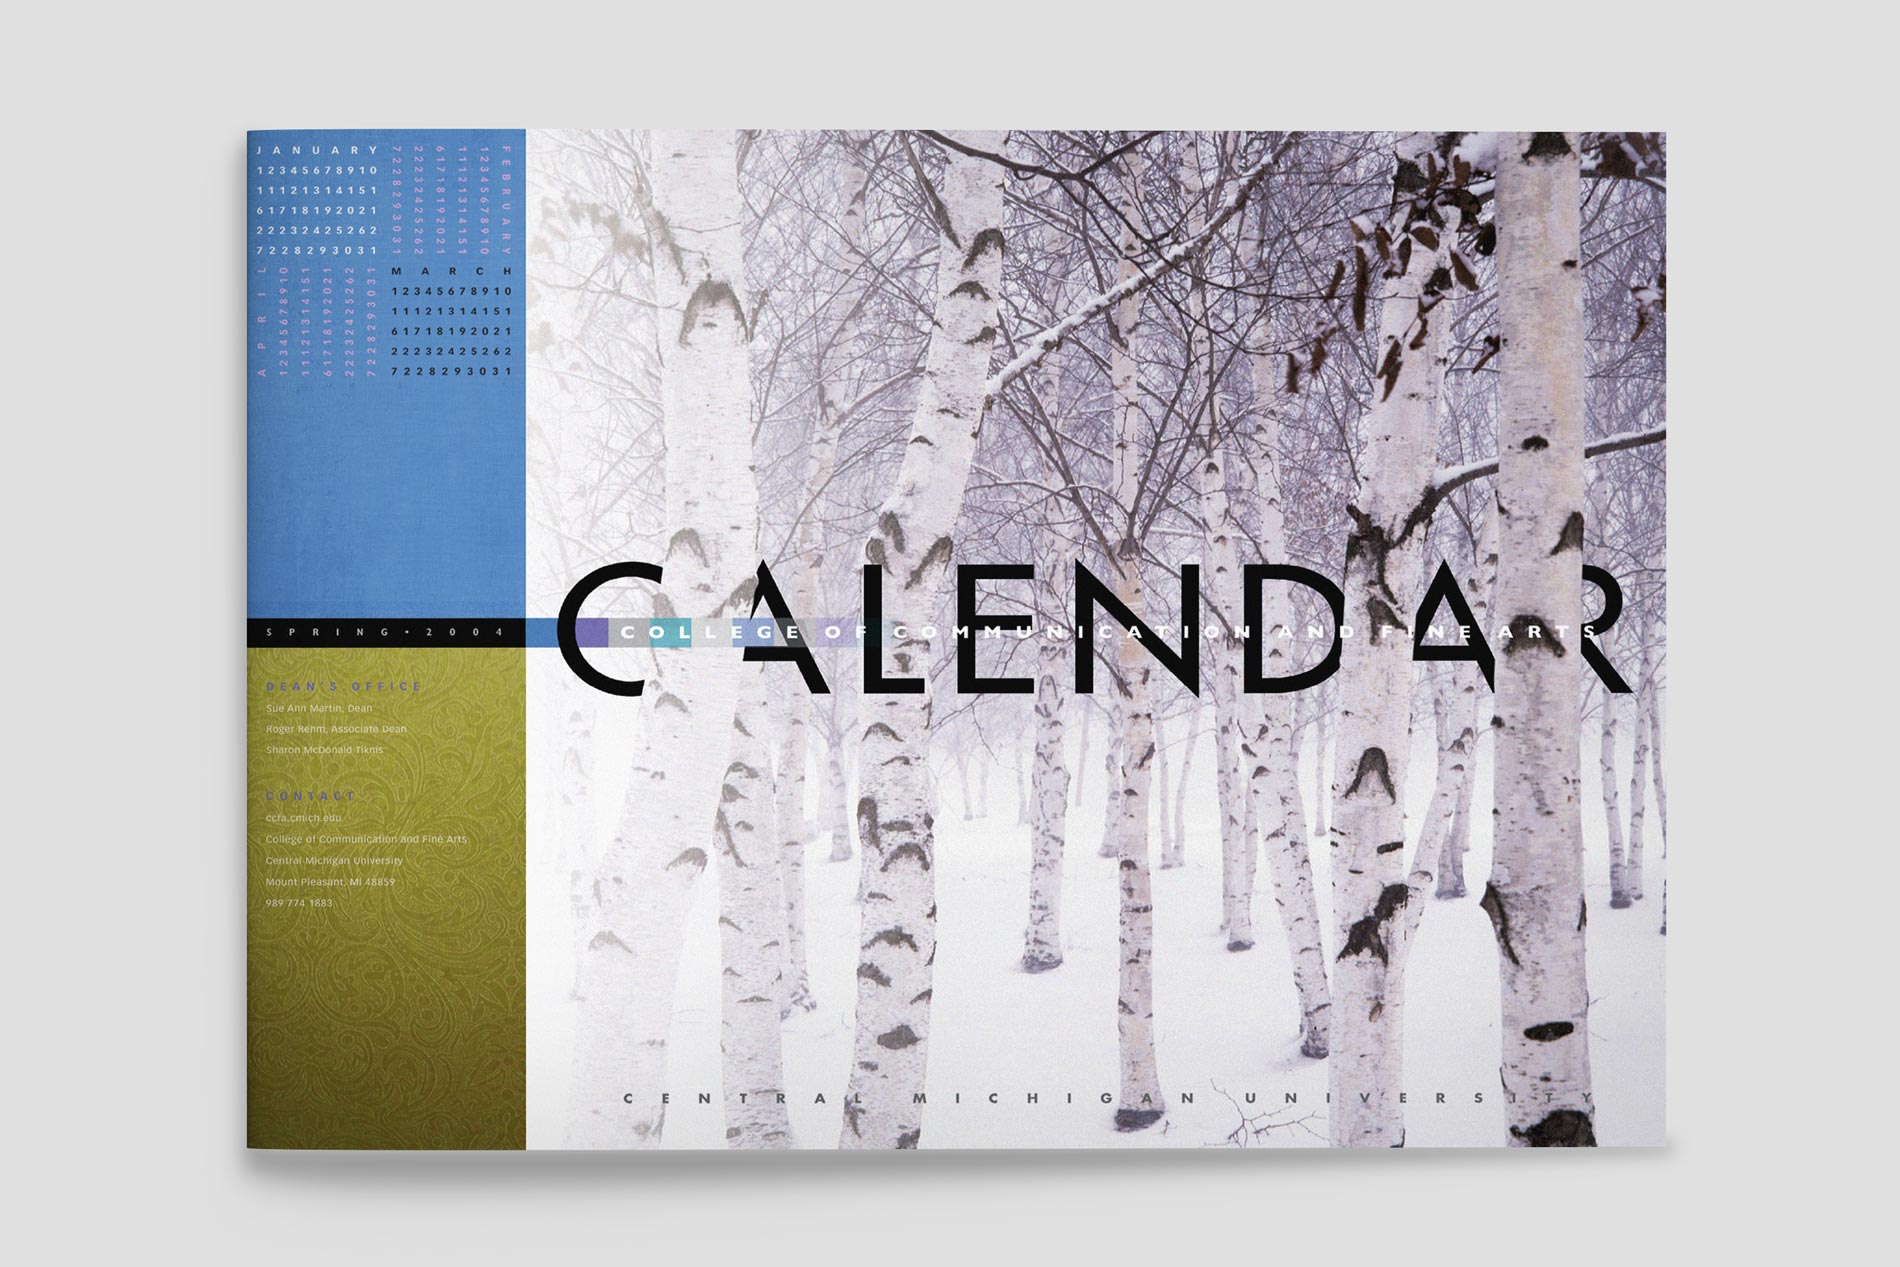 ip CMU Central Michigan University literature calendar cover mockup by Design Direction ClarkMost